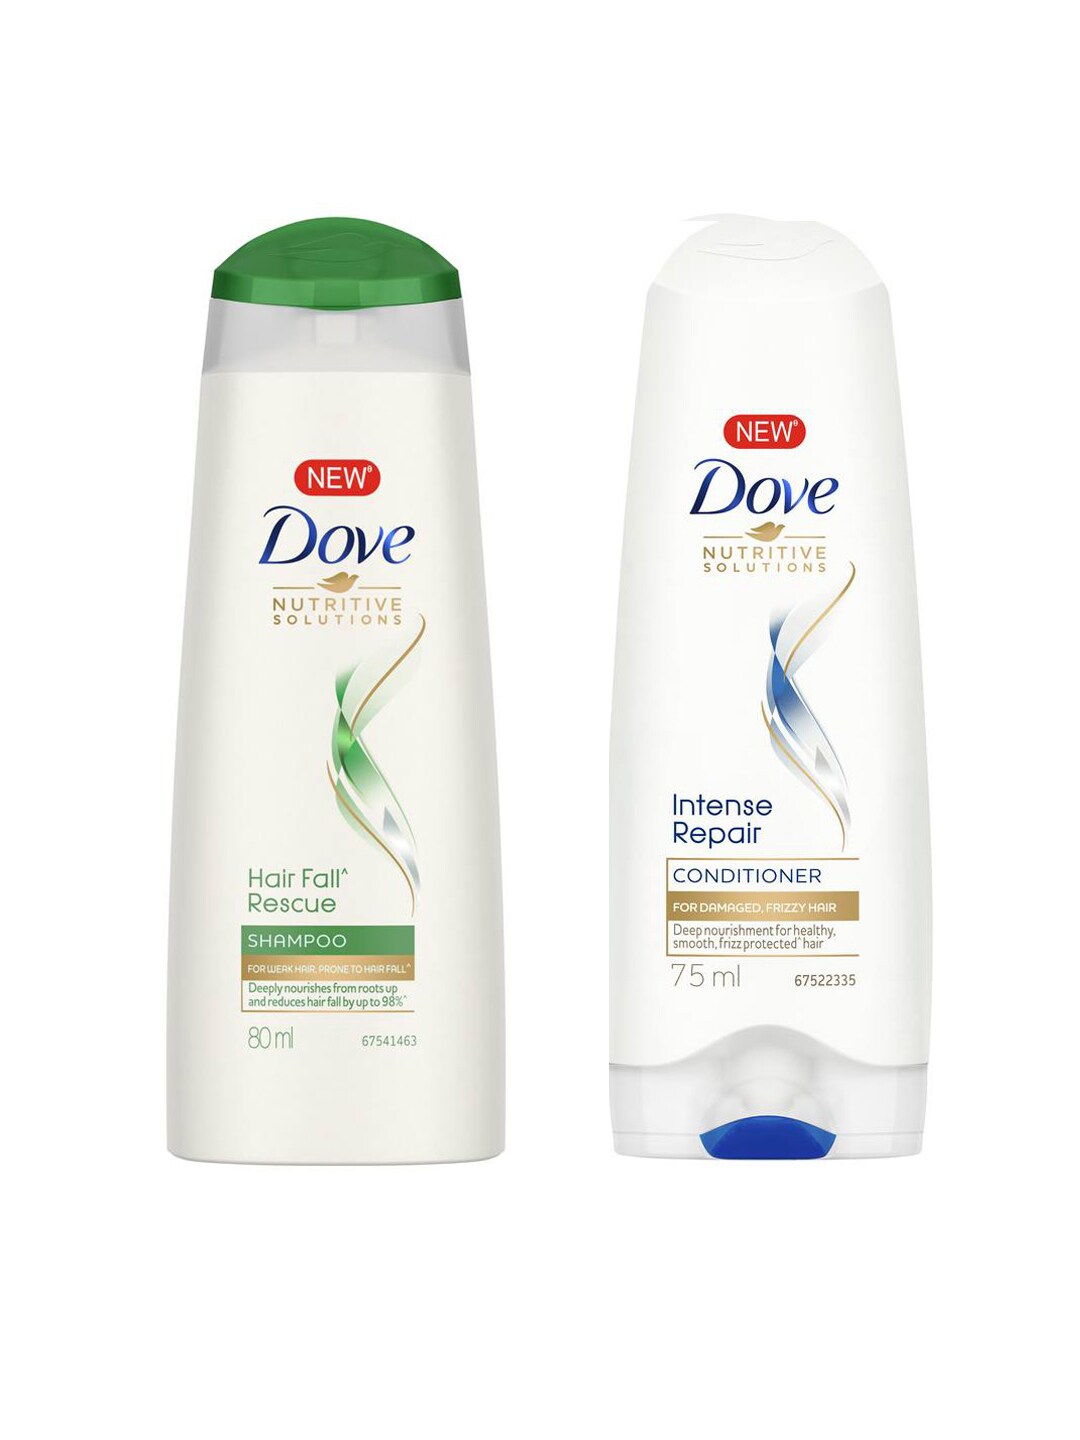 Dove Set Of Hair Fall Rescue Shampoo & Intense Repair Conditioner Price in India